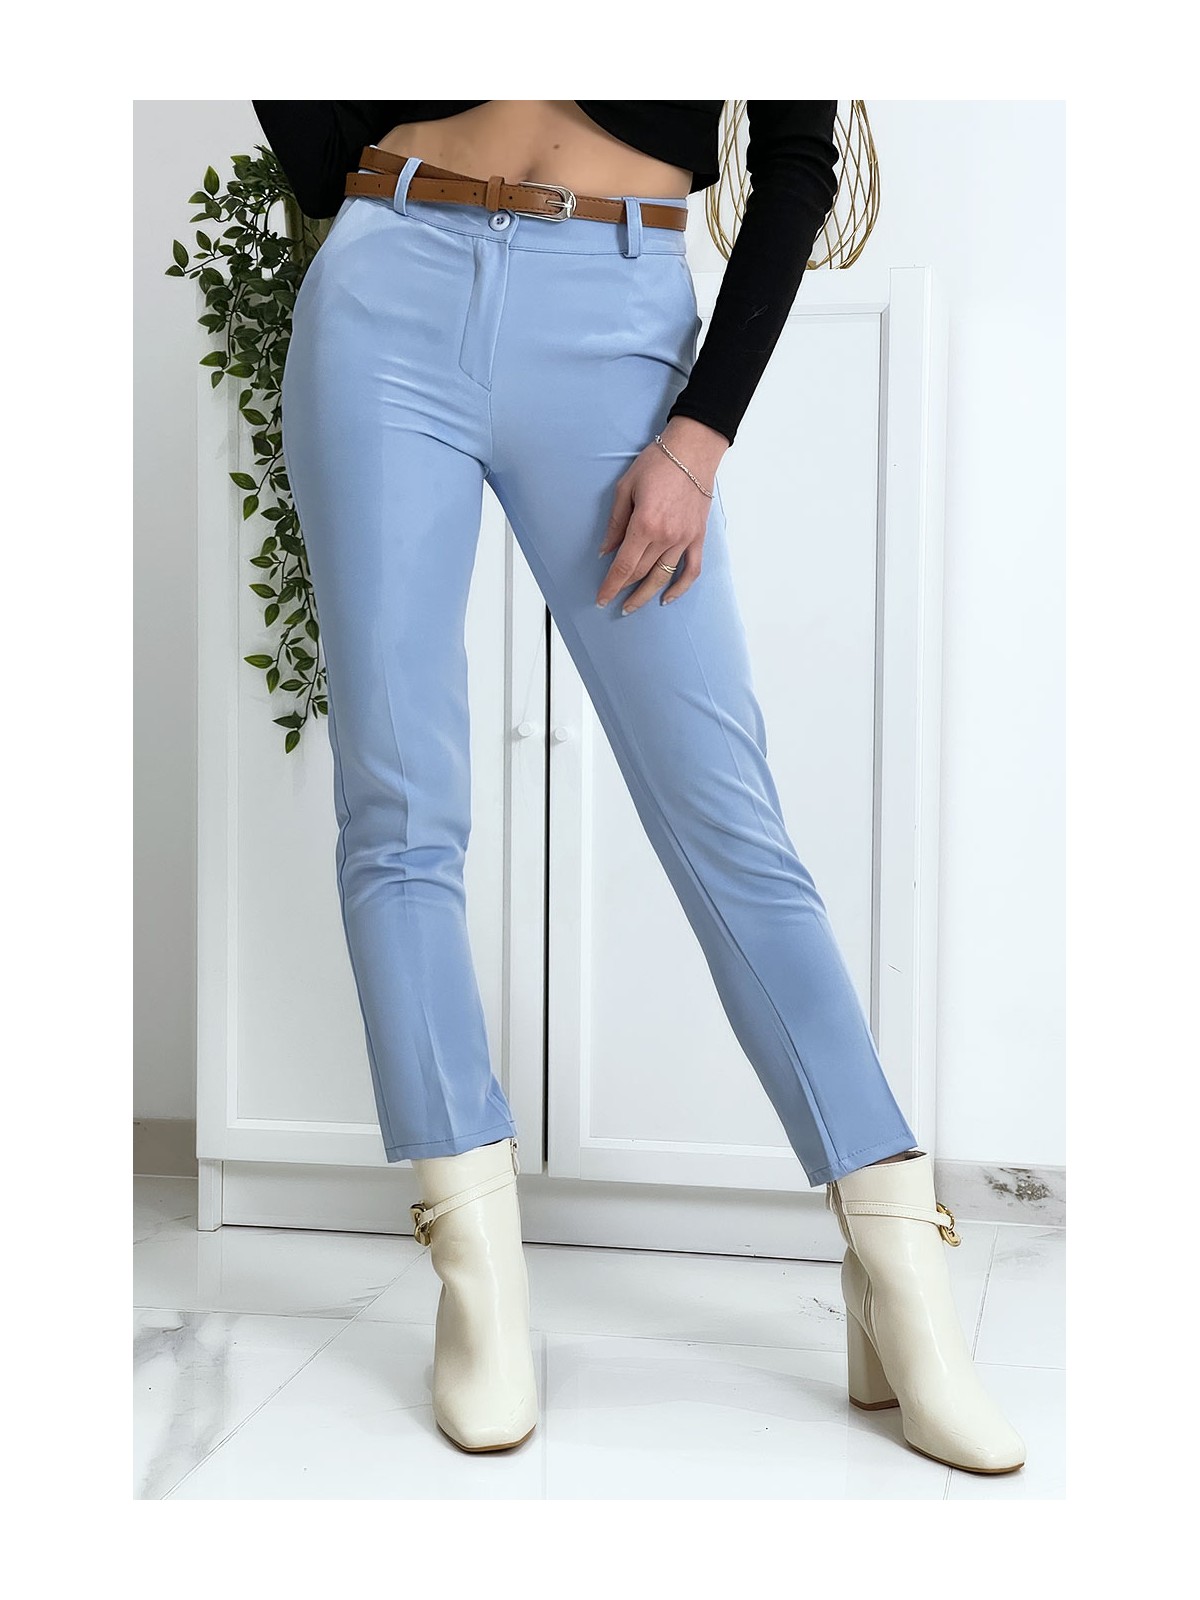 Pantalon working girl bleu avec poches et ceinture - 2